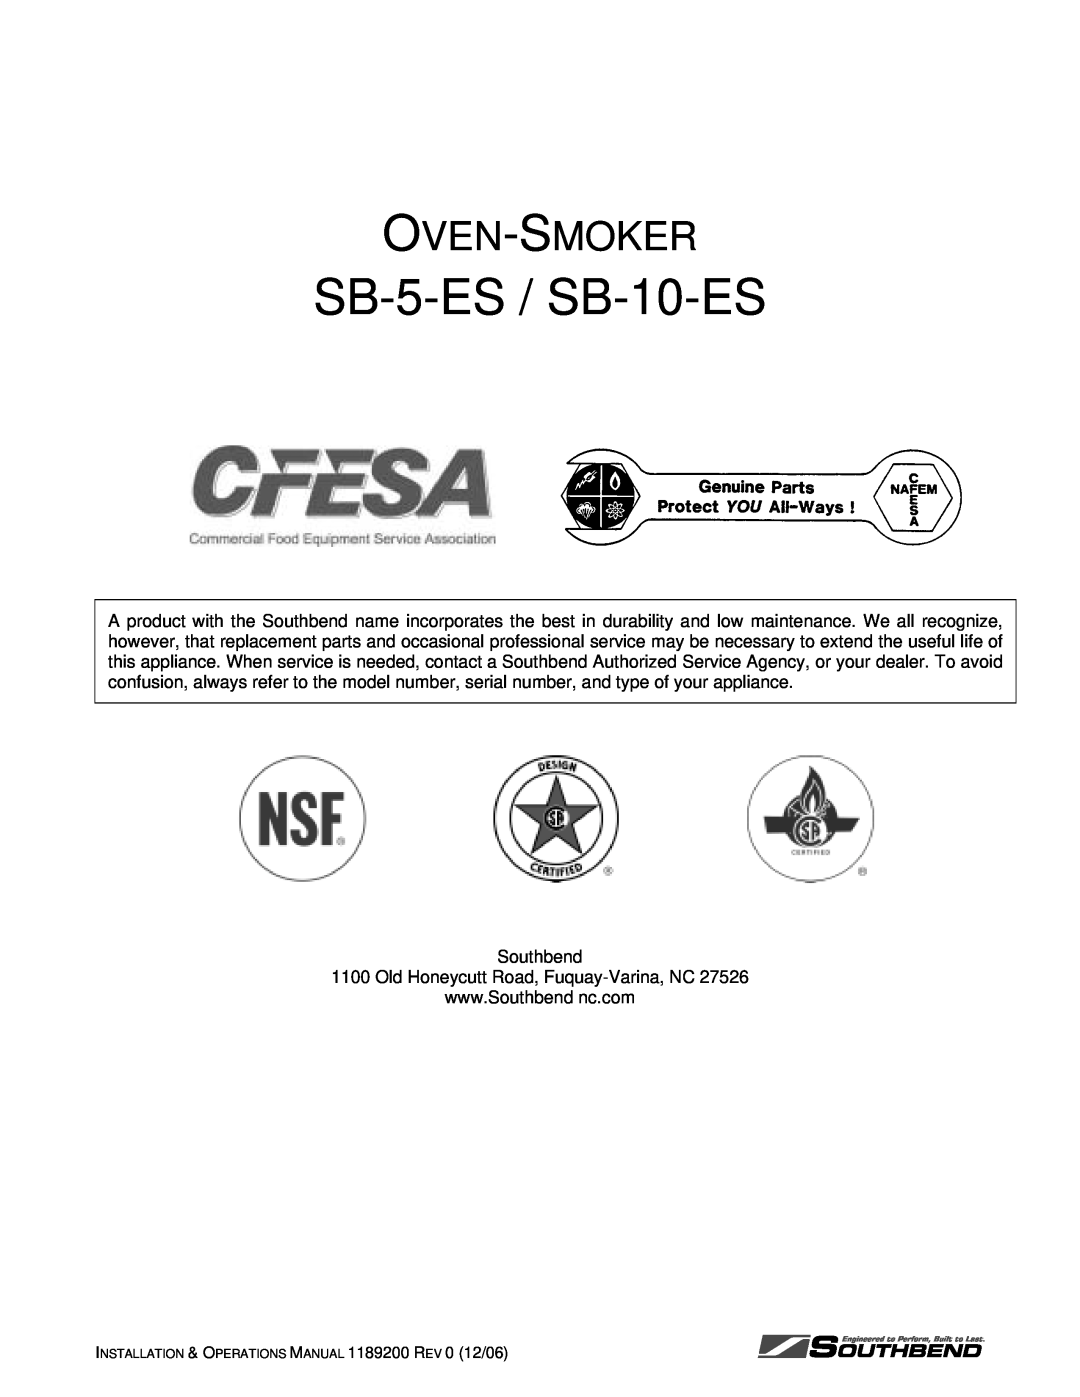 Southbend manual SB-5-ES / SB-10-ES, Oven-Smoker 